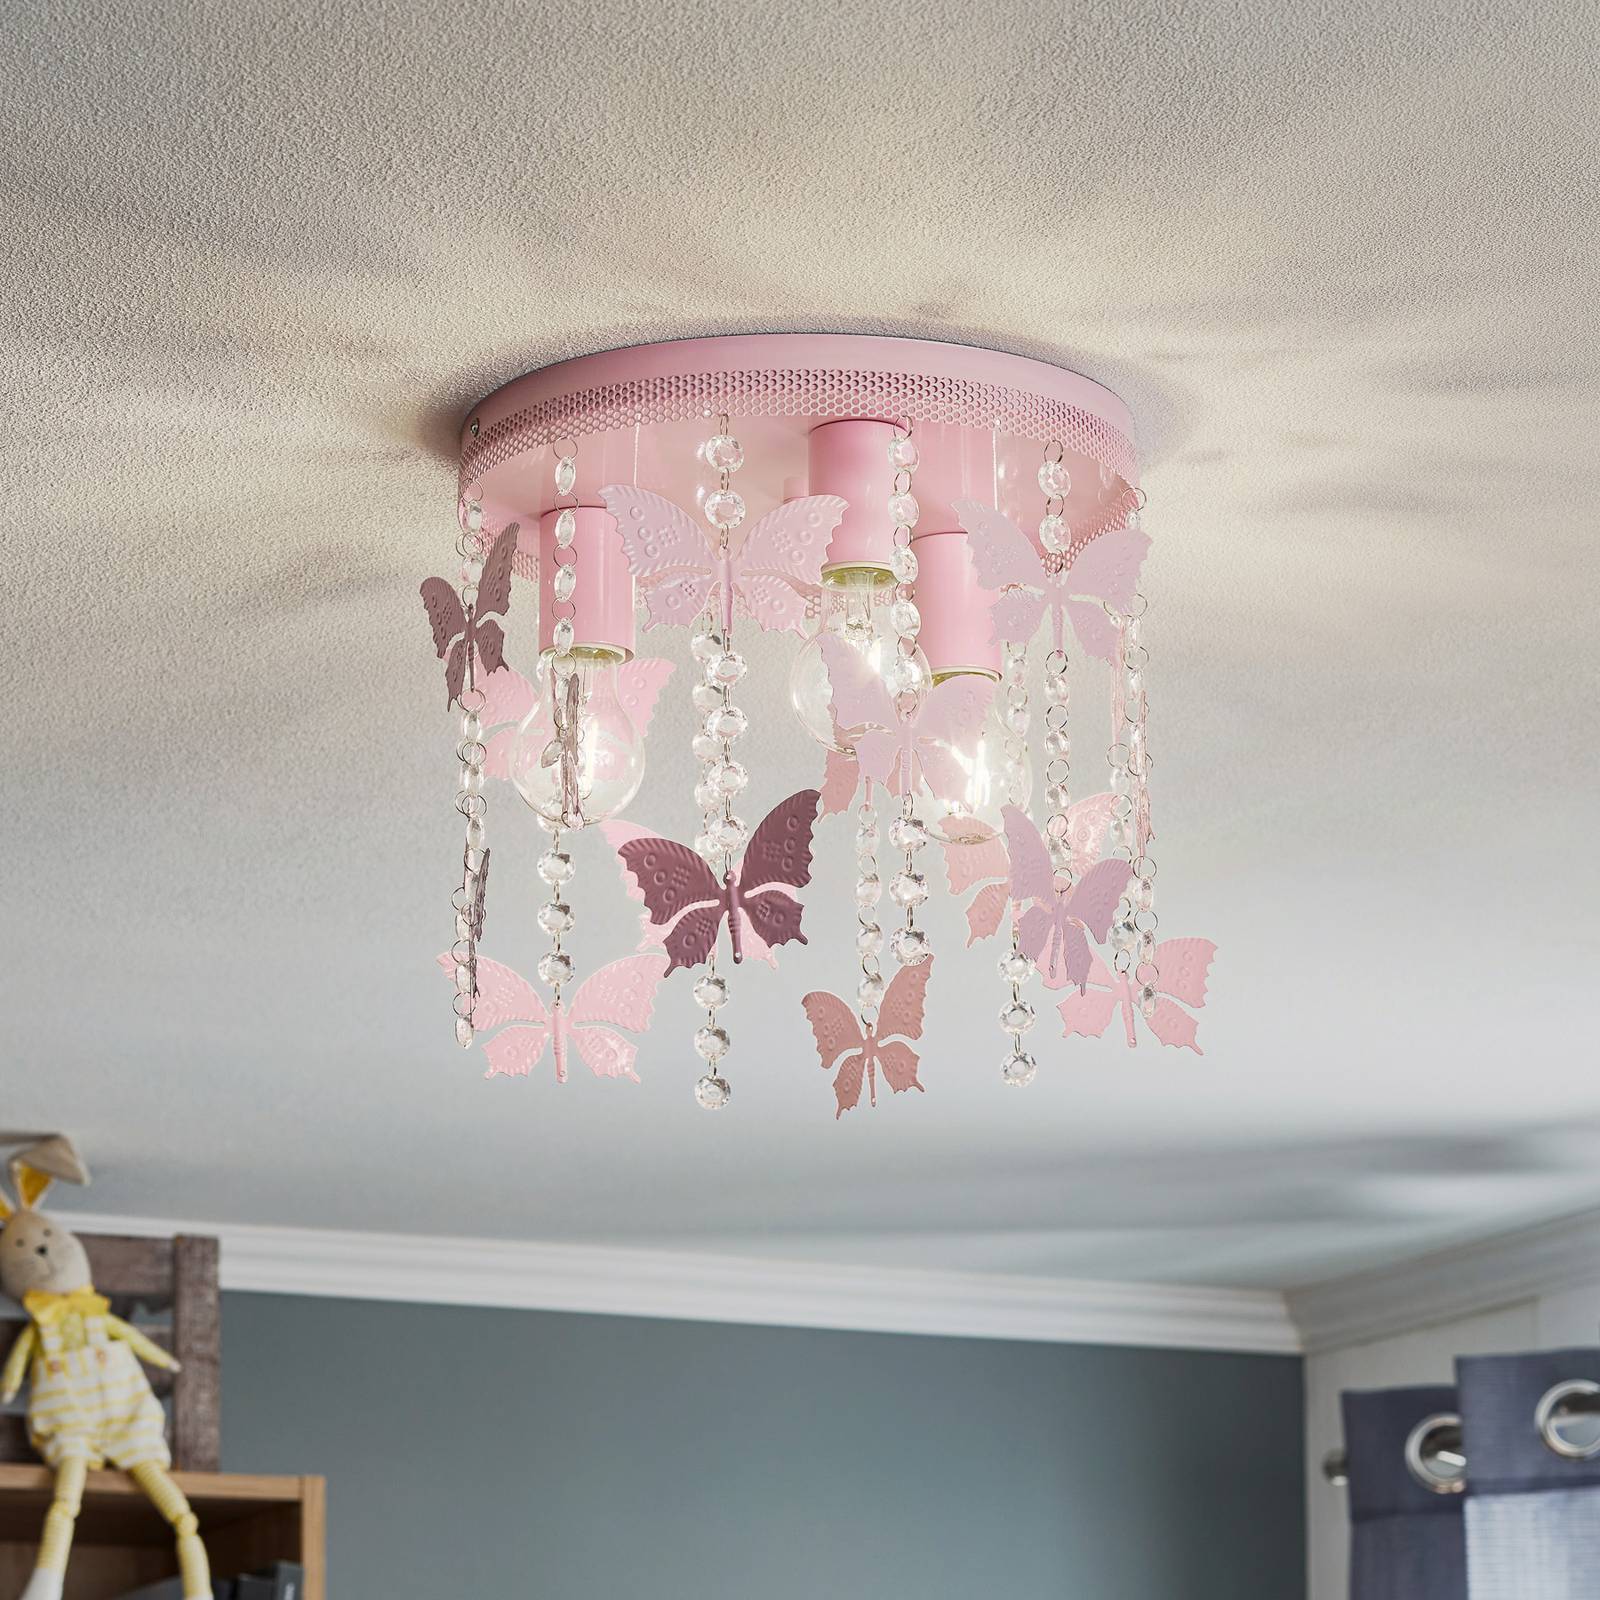 Image of Eko-Light Plafoniera Angelica in rosa con farfalle